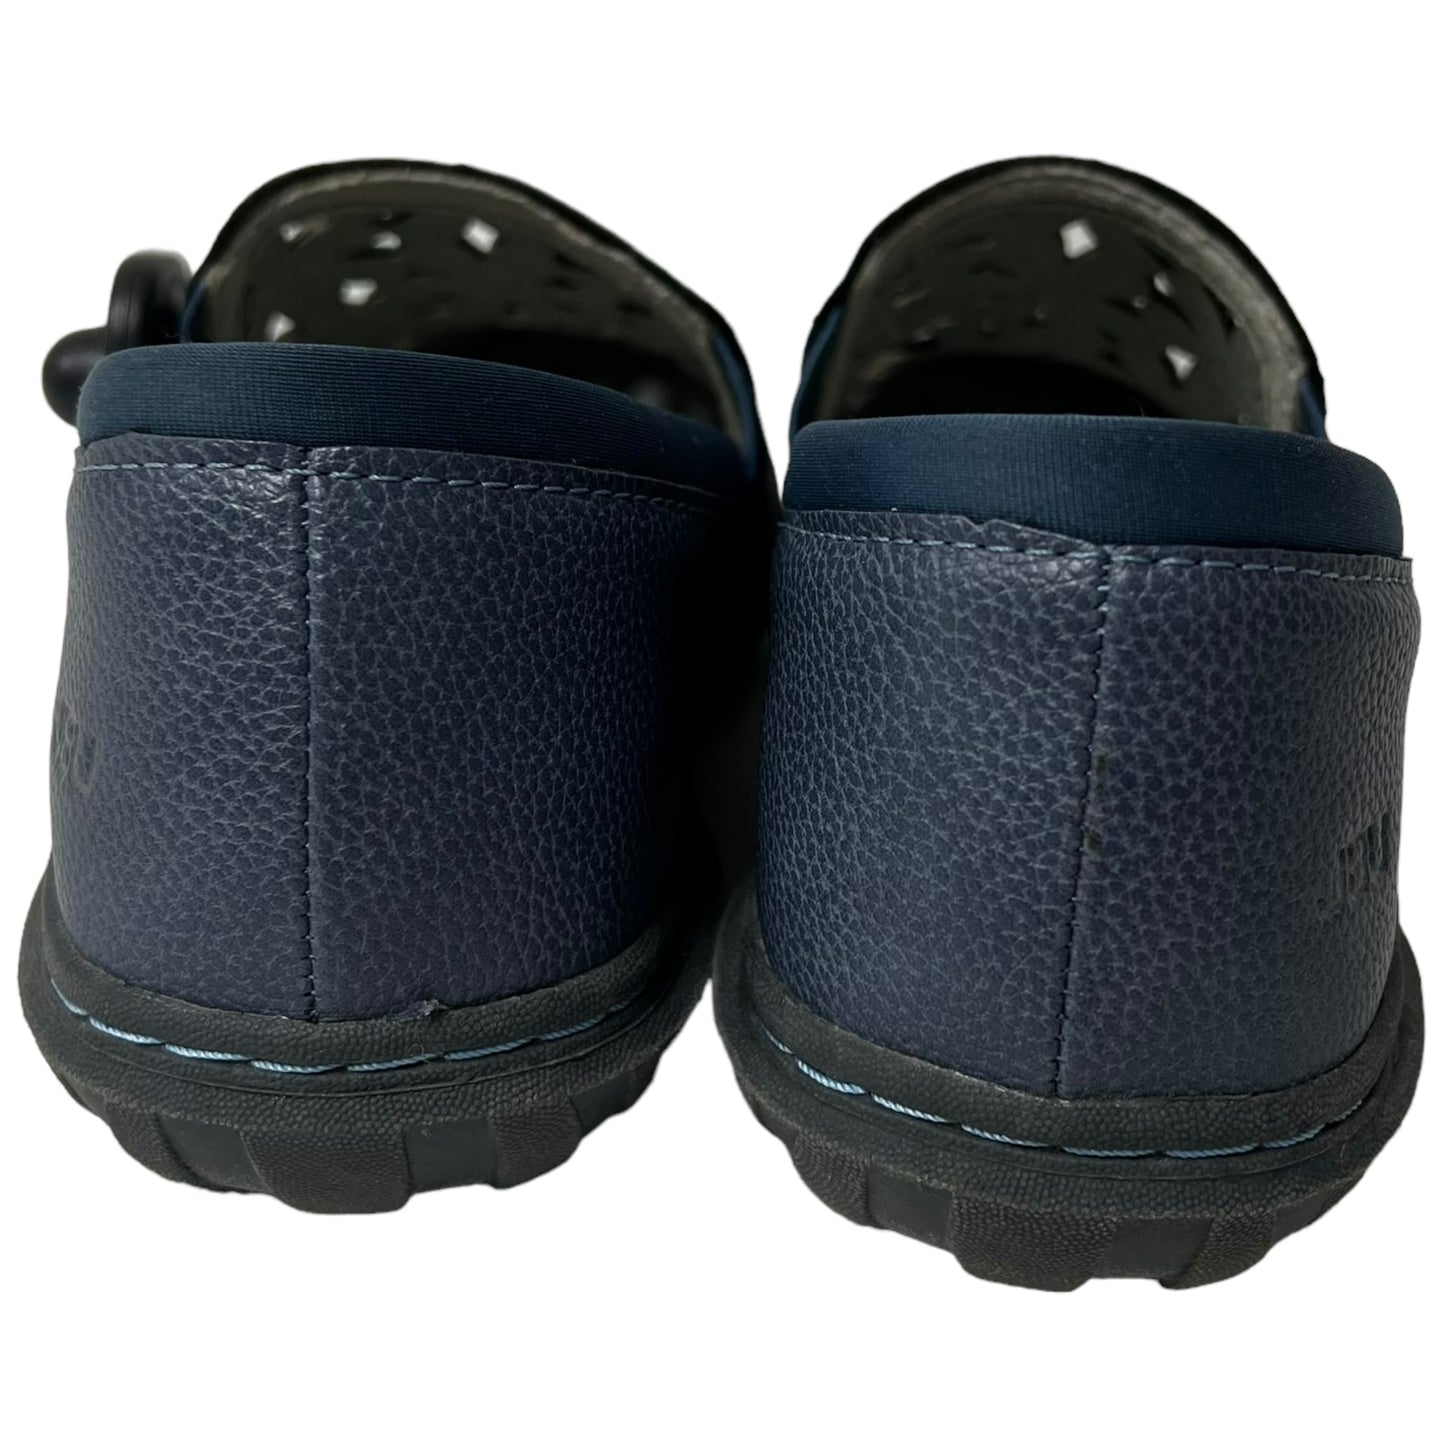 Shoes Flats Loafer Oxford By Jambu  Size: 6.5